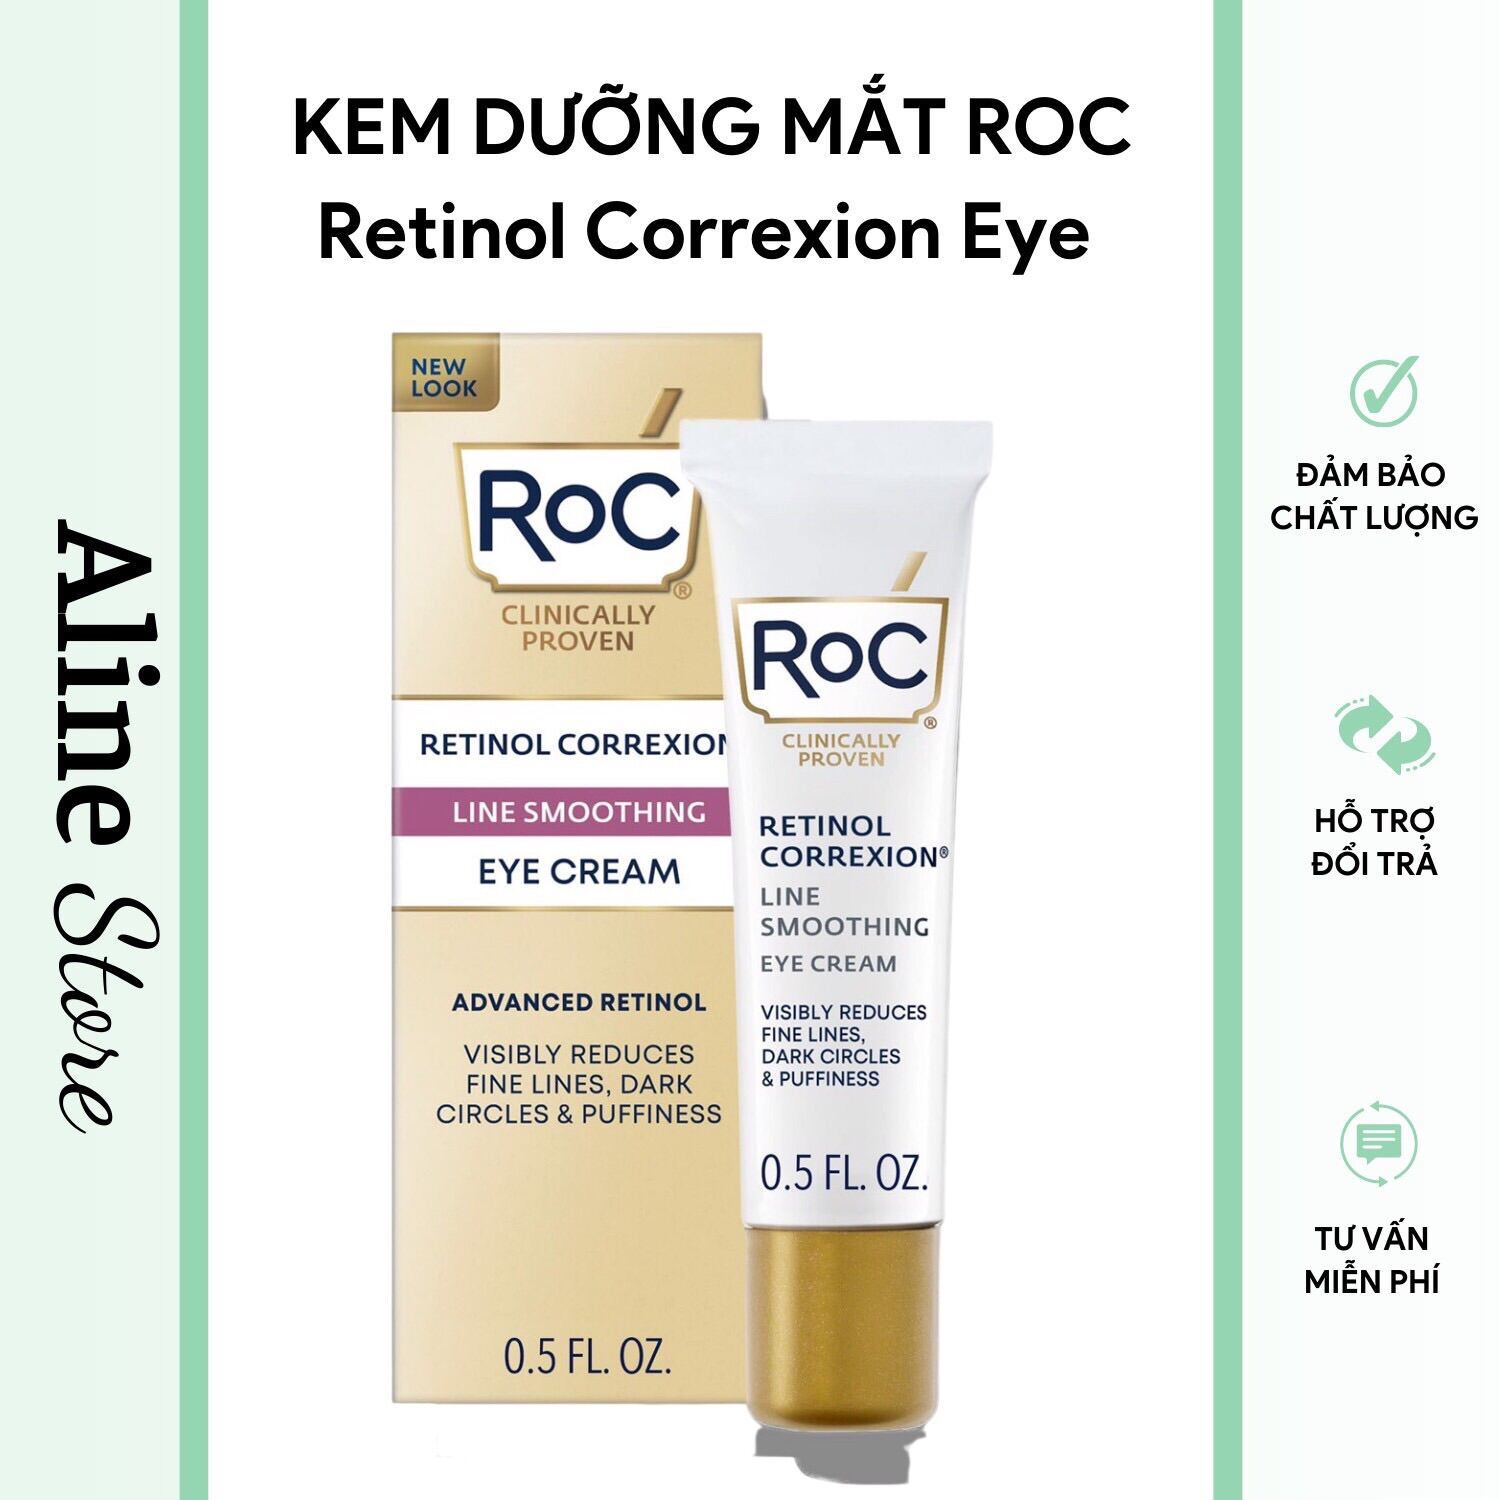 KEM DƯỠNG MẮT ROC Retinol Correxion Eye Cream